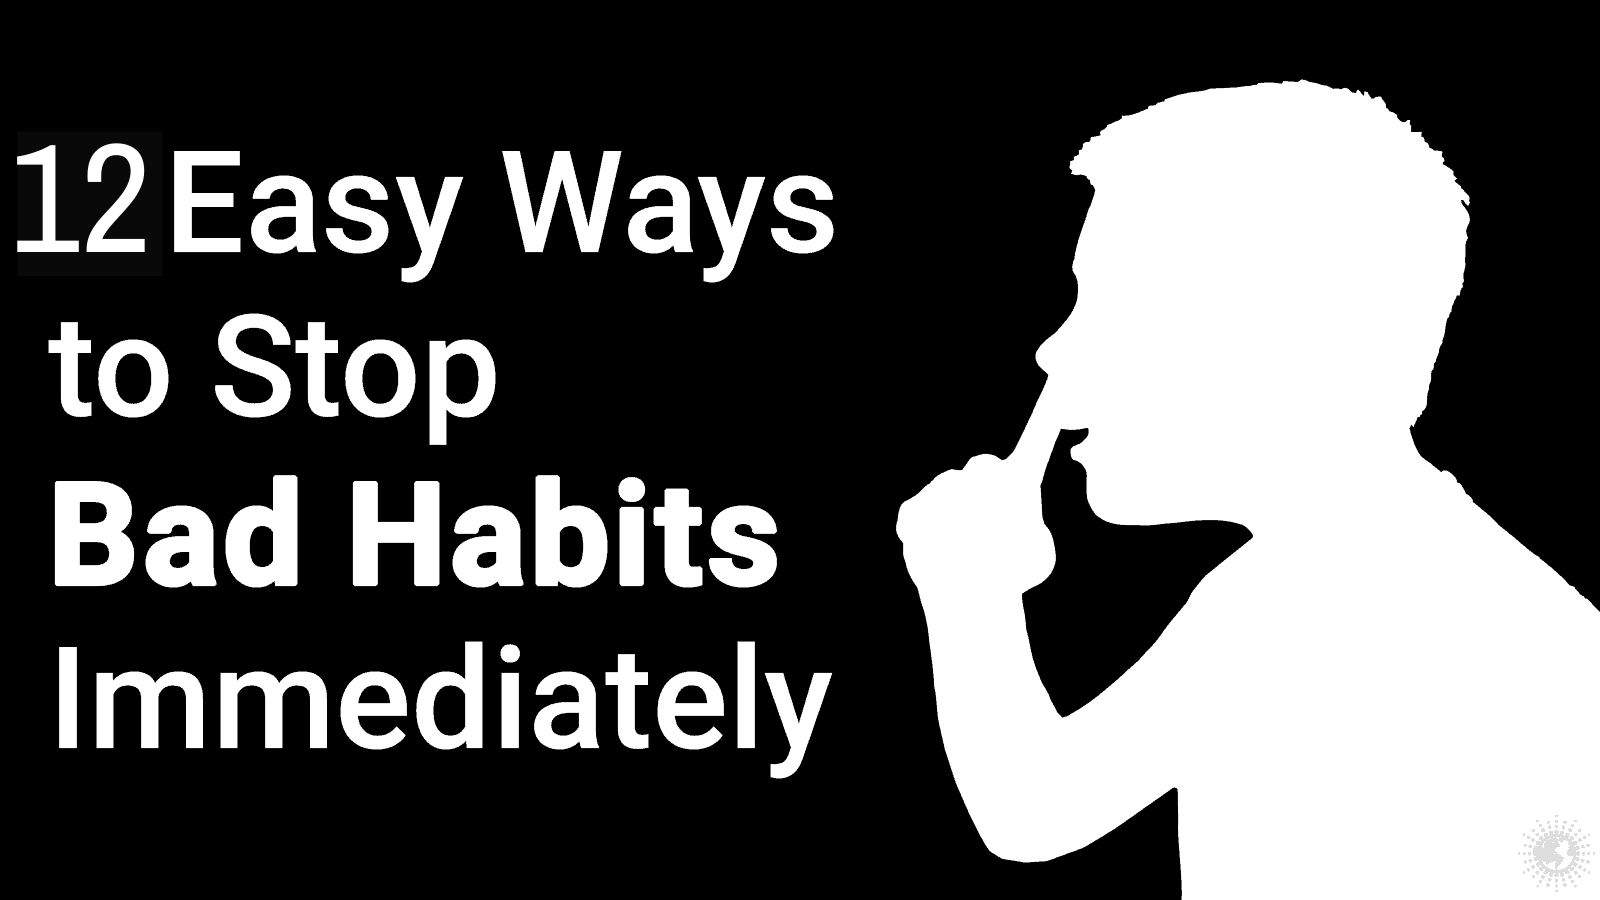 12 Easy Ways to Stop Bad Habits Immediately